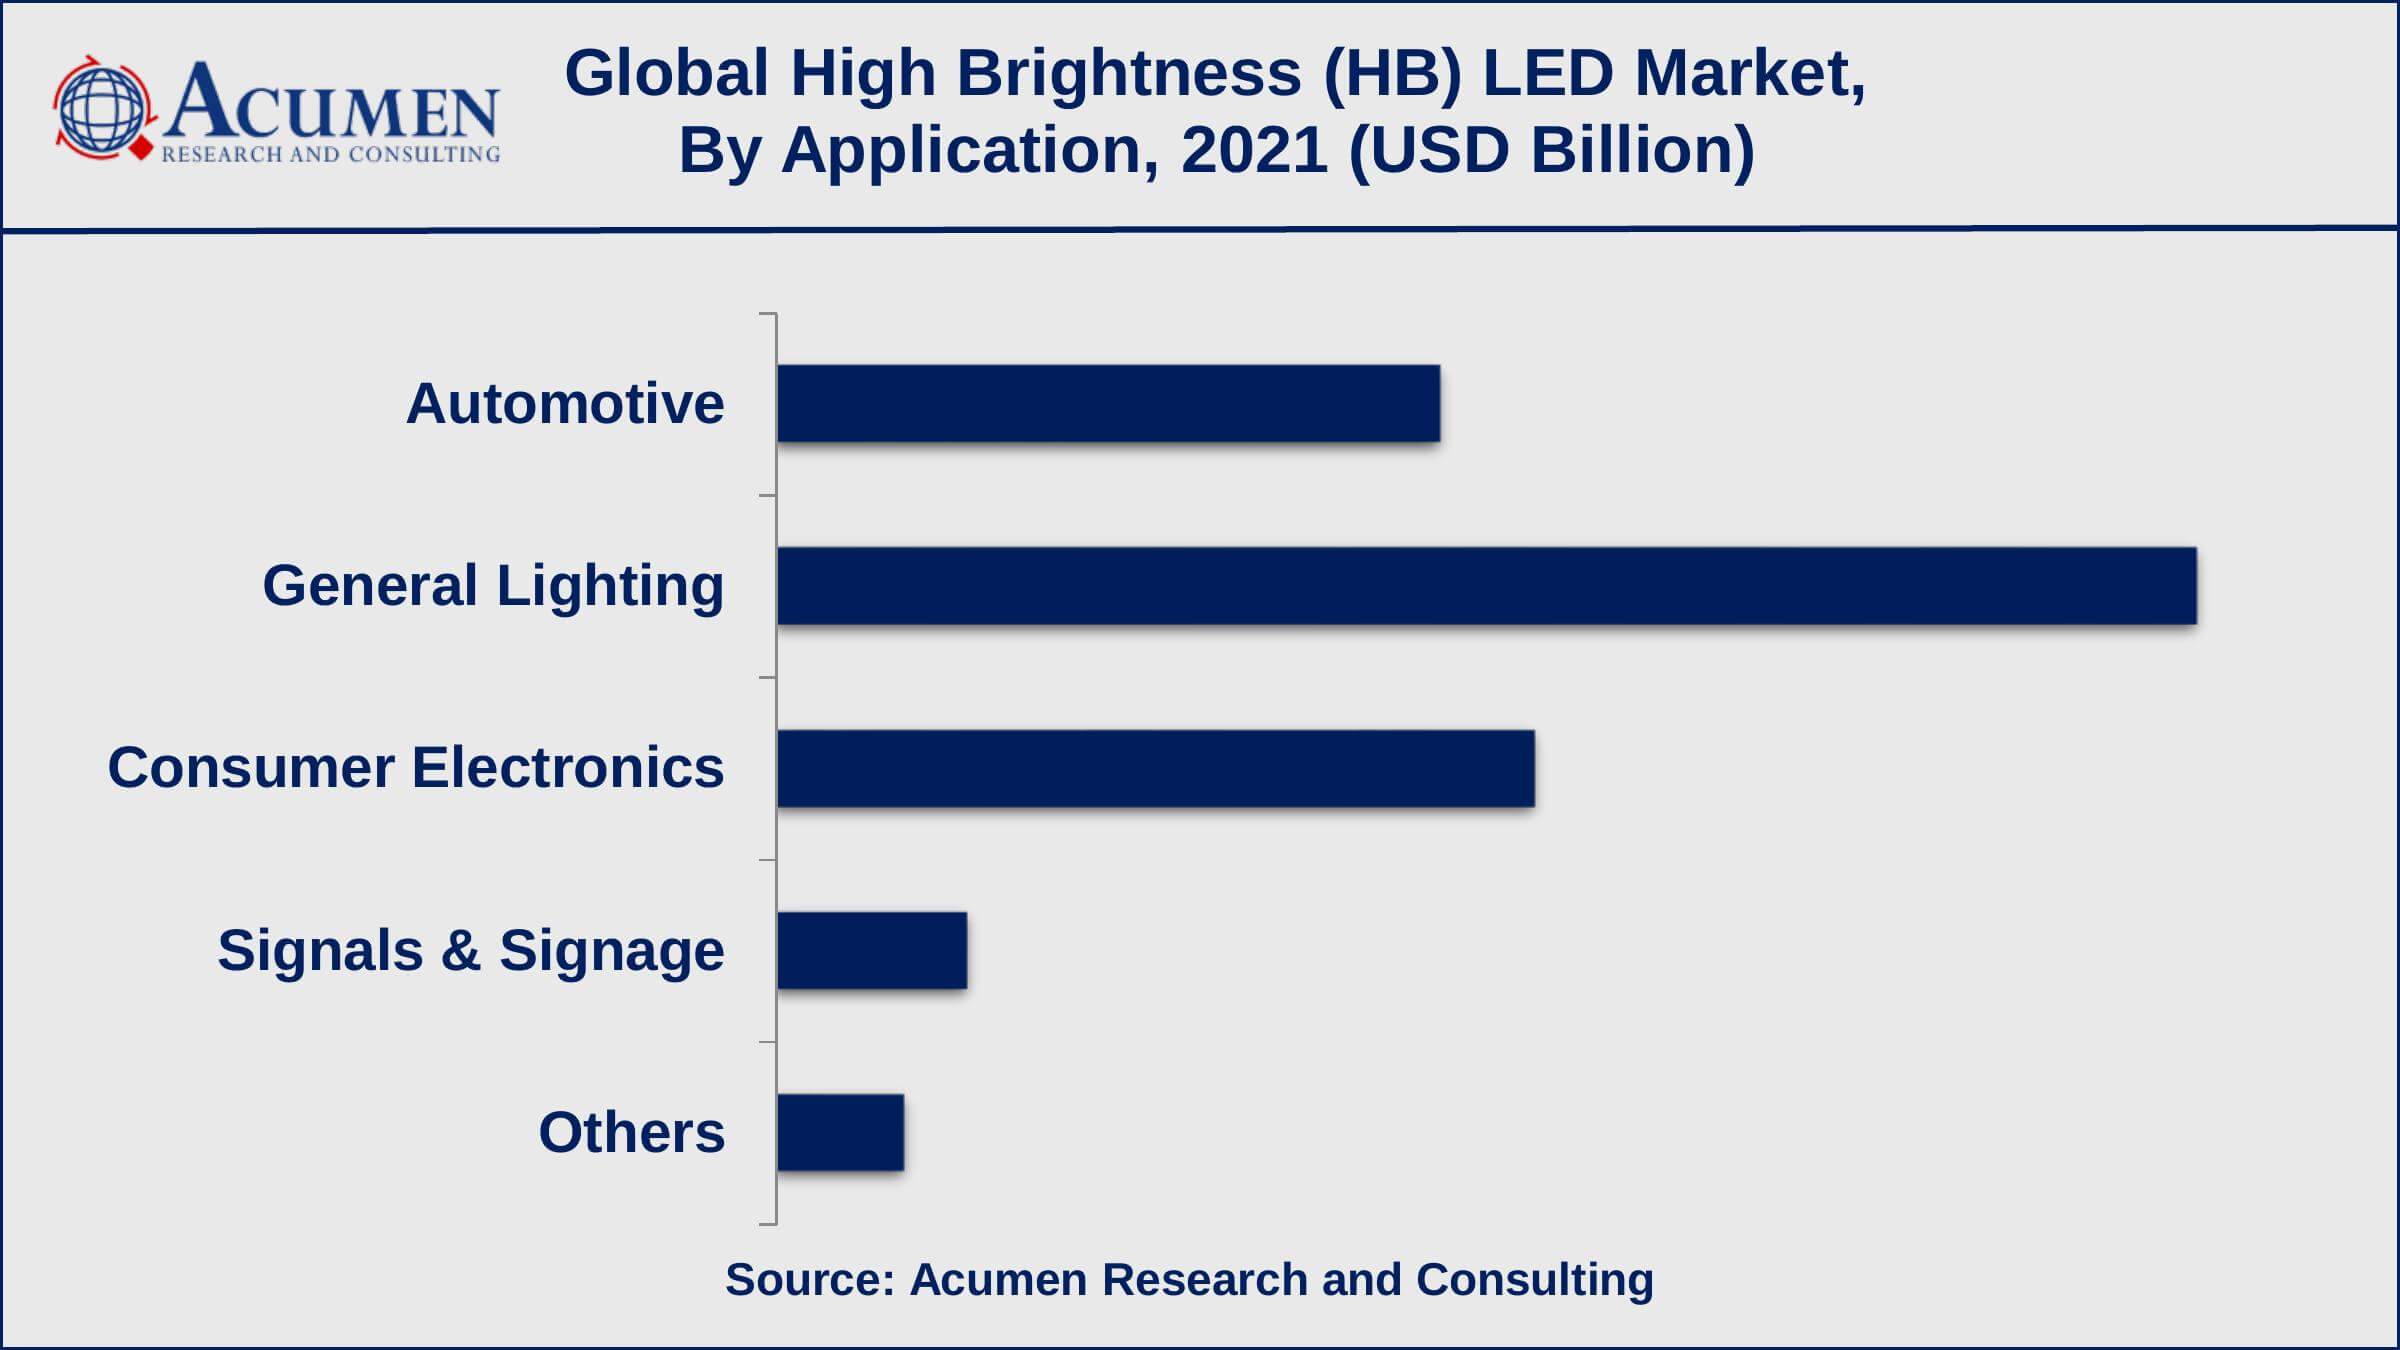 Based on application, general lighting sub-segment achieved USD 6.6 billion revenue in 2021